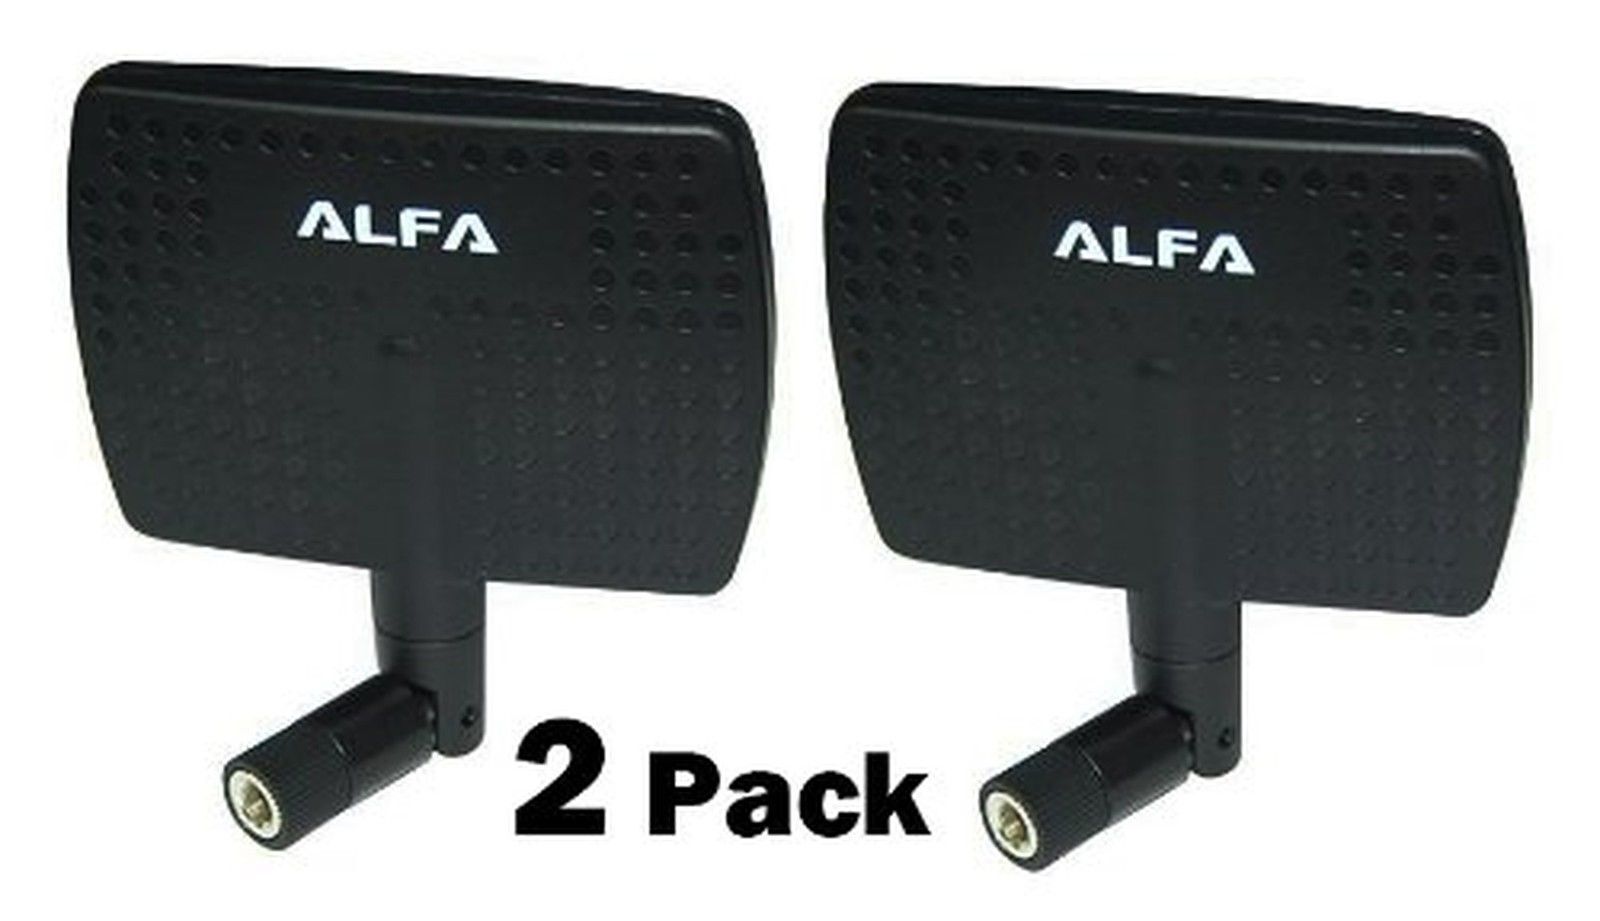 2 Pack Alfa 2.4HGz 7dBi Booster RP-SMA Panel High-Gain Screw-On Swivel Antenna